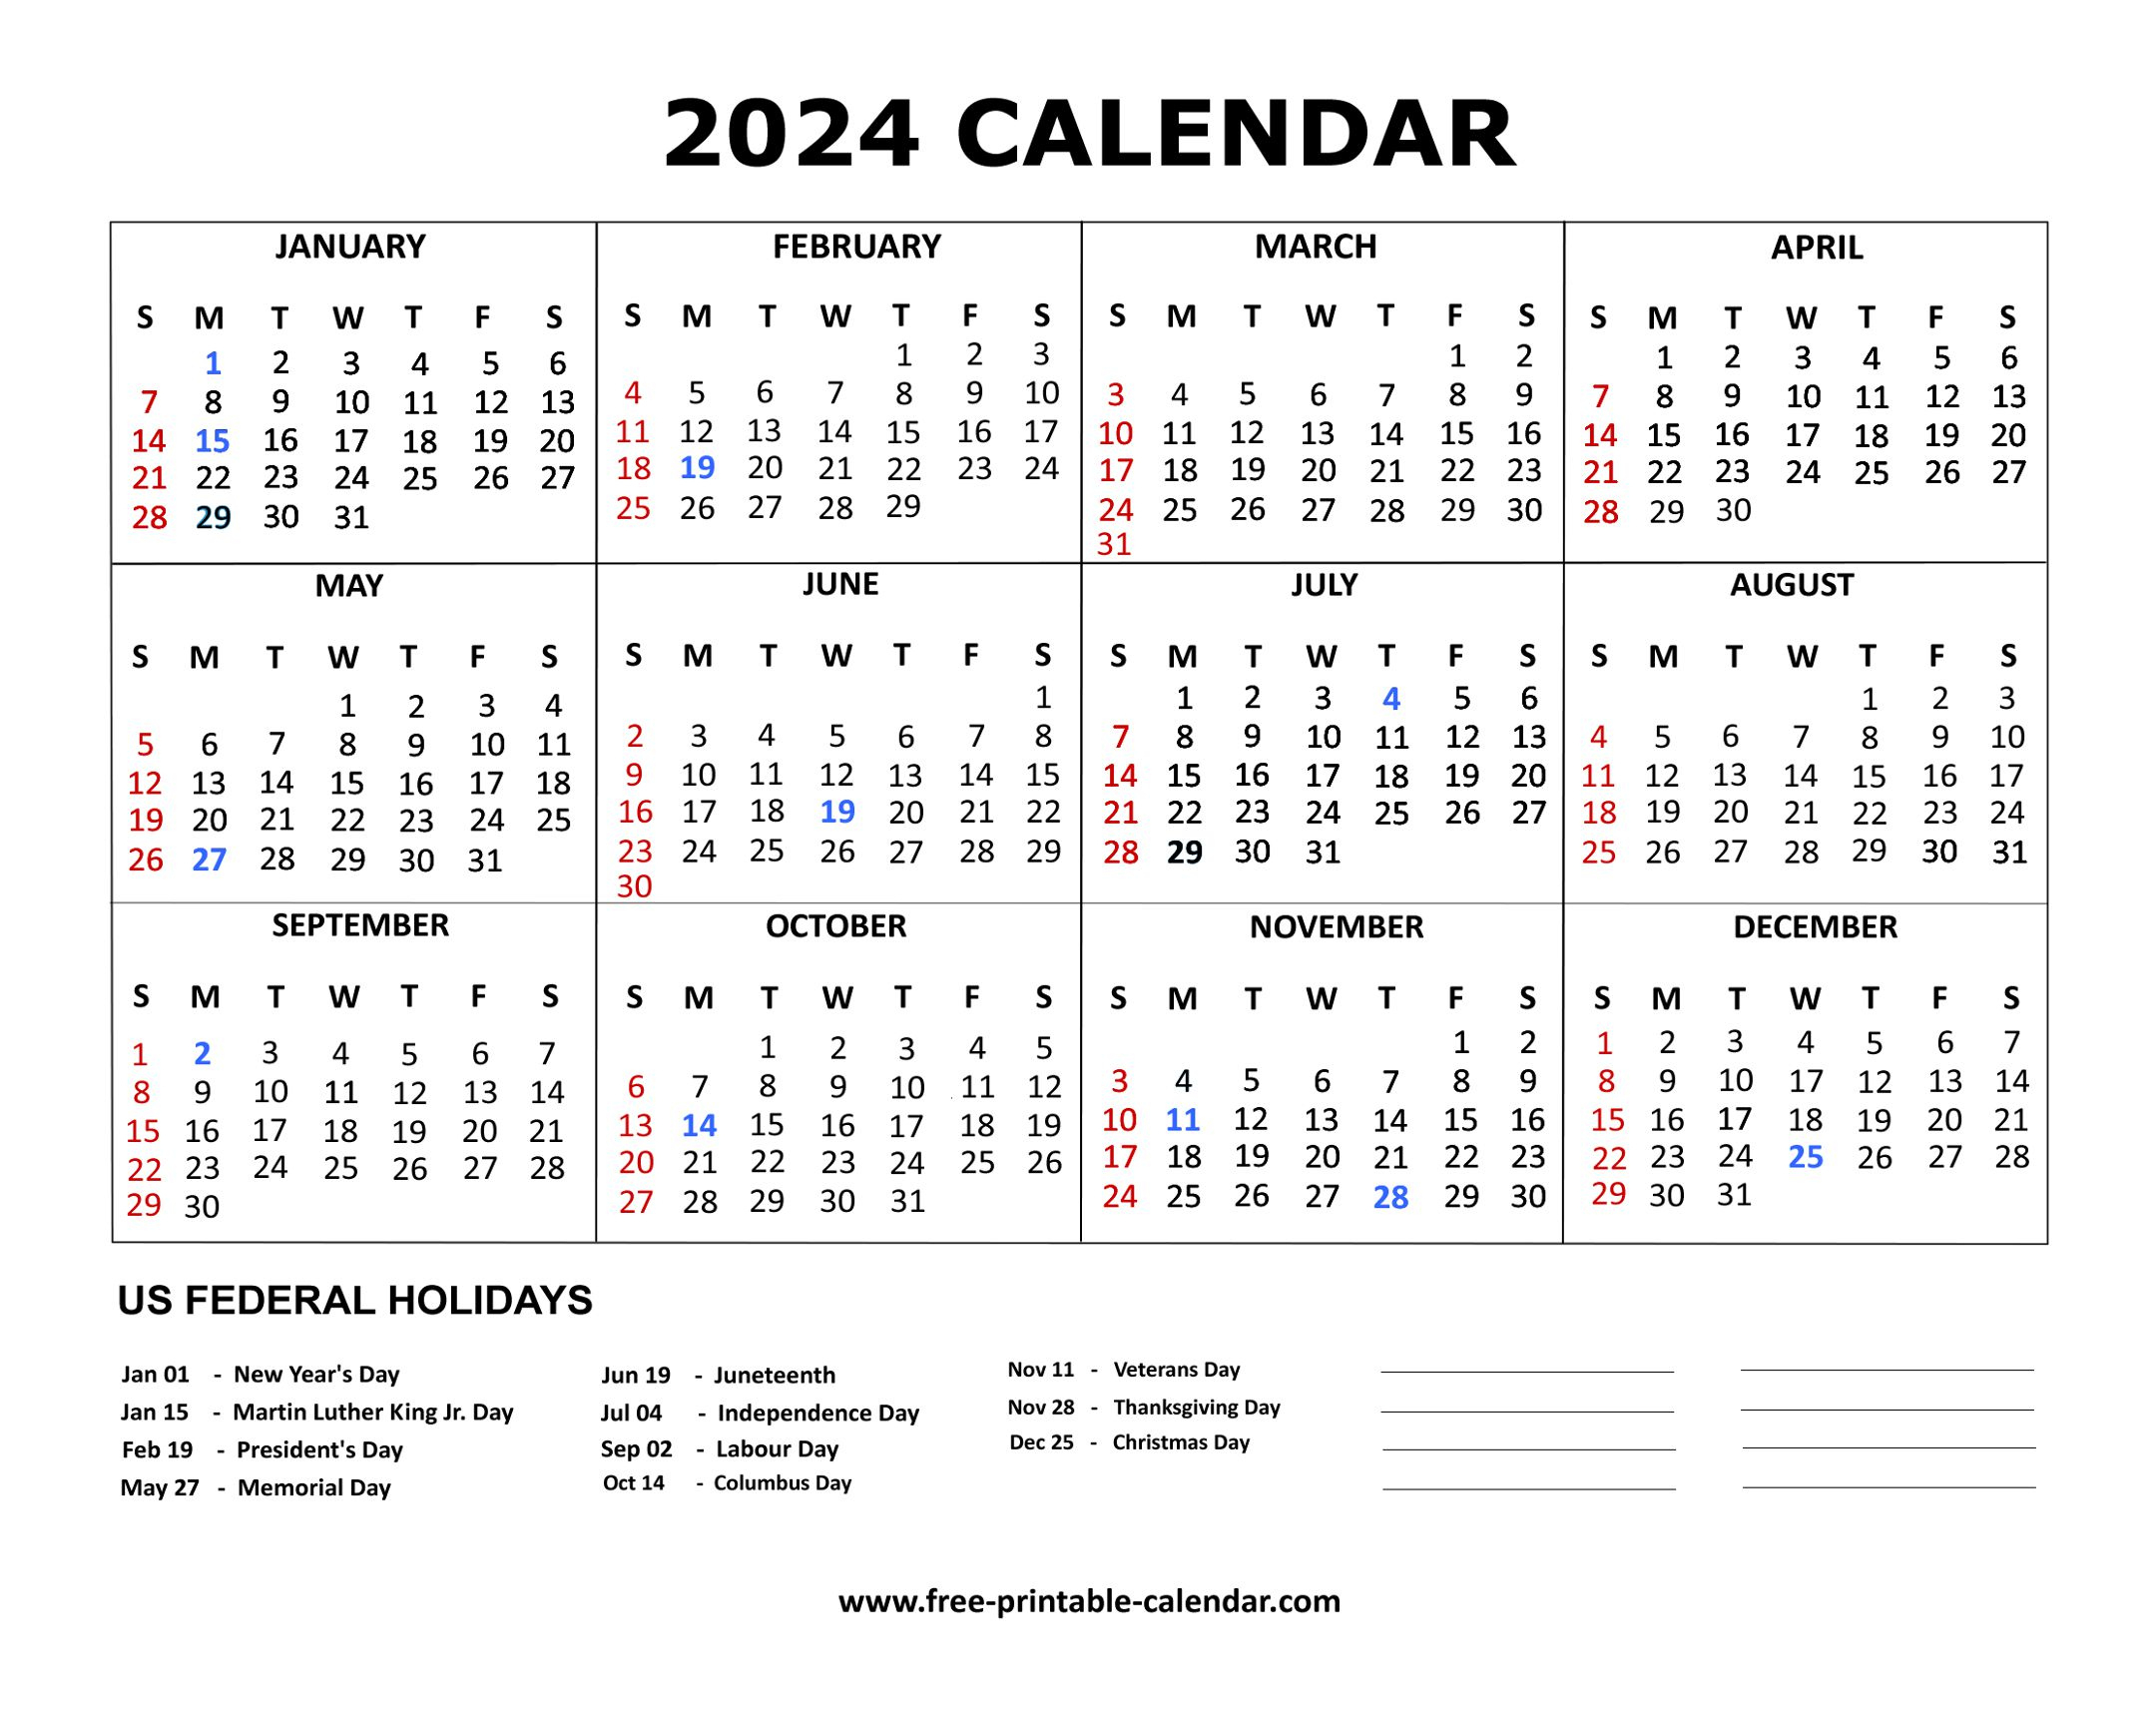 2024 Calendar | Printable Calendar 2024 Free With Holidays